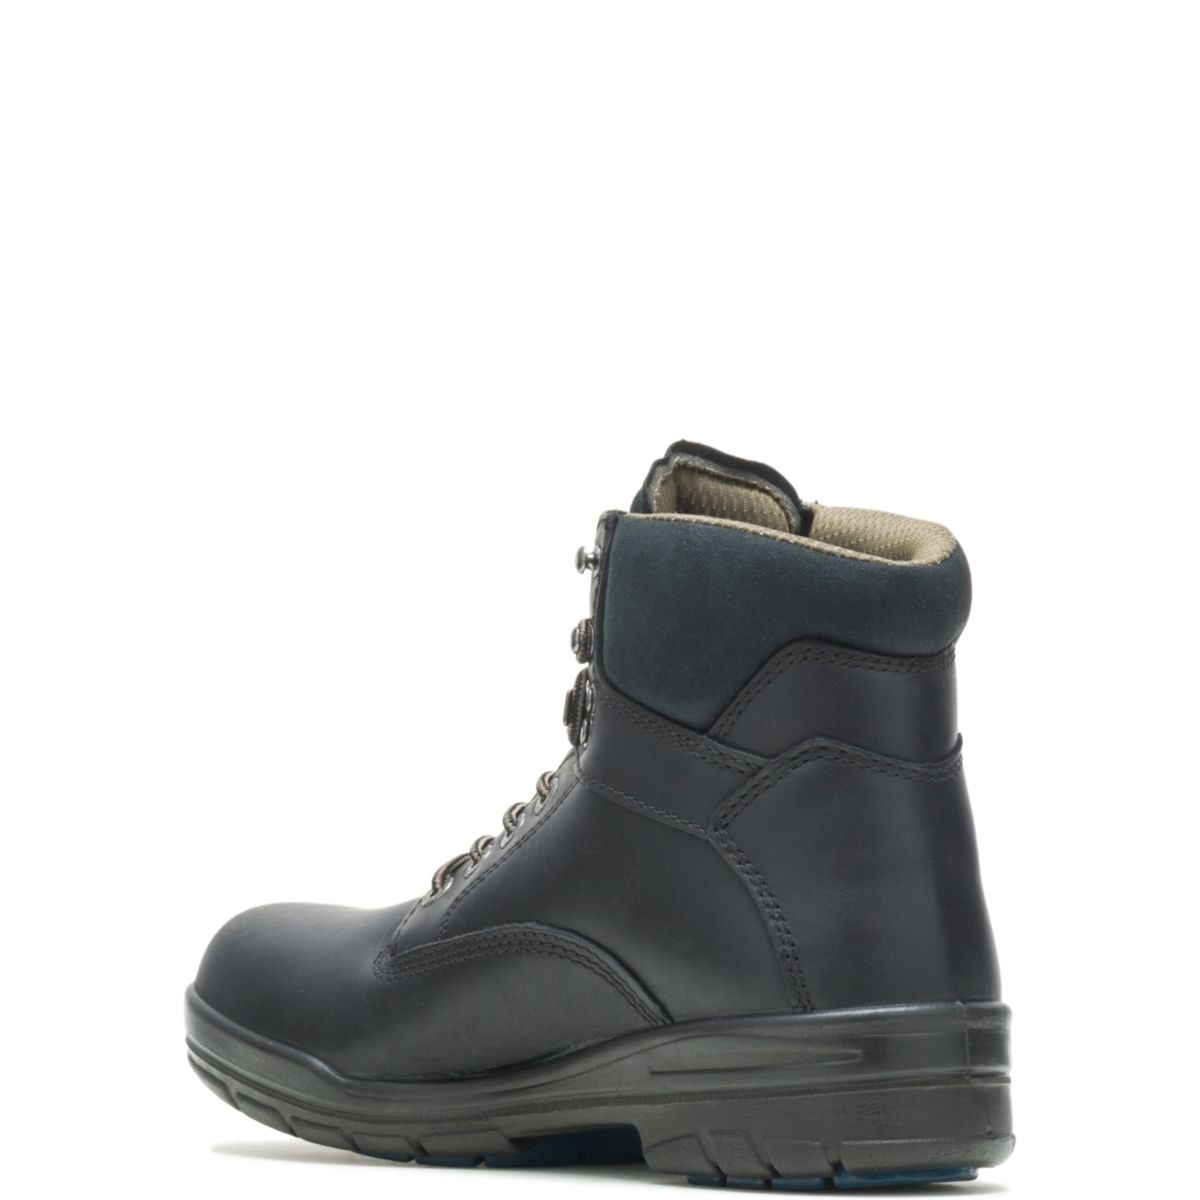 WOLVERINE Men's 6 DuraShocksÂ® Slip Resistant Direct-Attached Lined Soft Toe Work Boot Black - W03123 14 WIDE BLACK - BLACK, 11.5 Wide